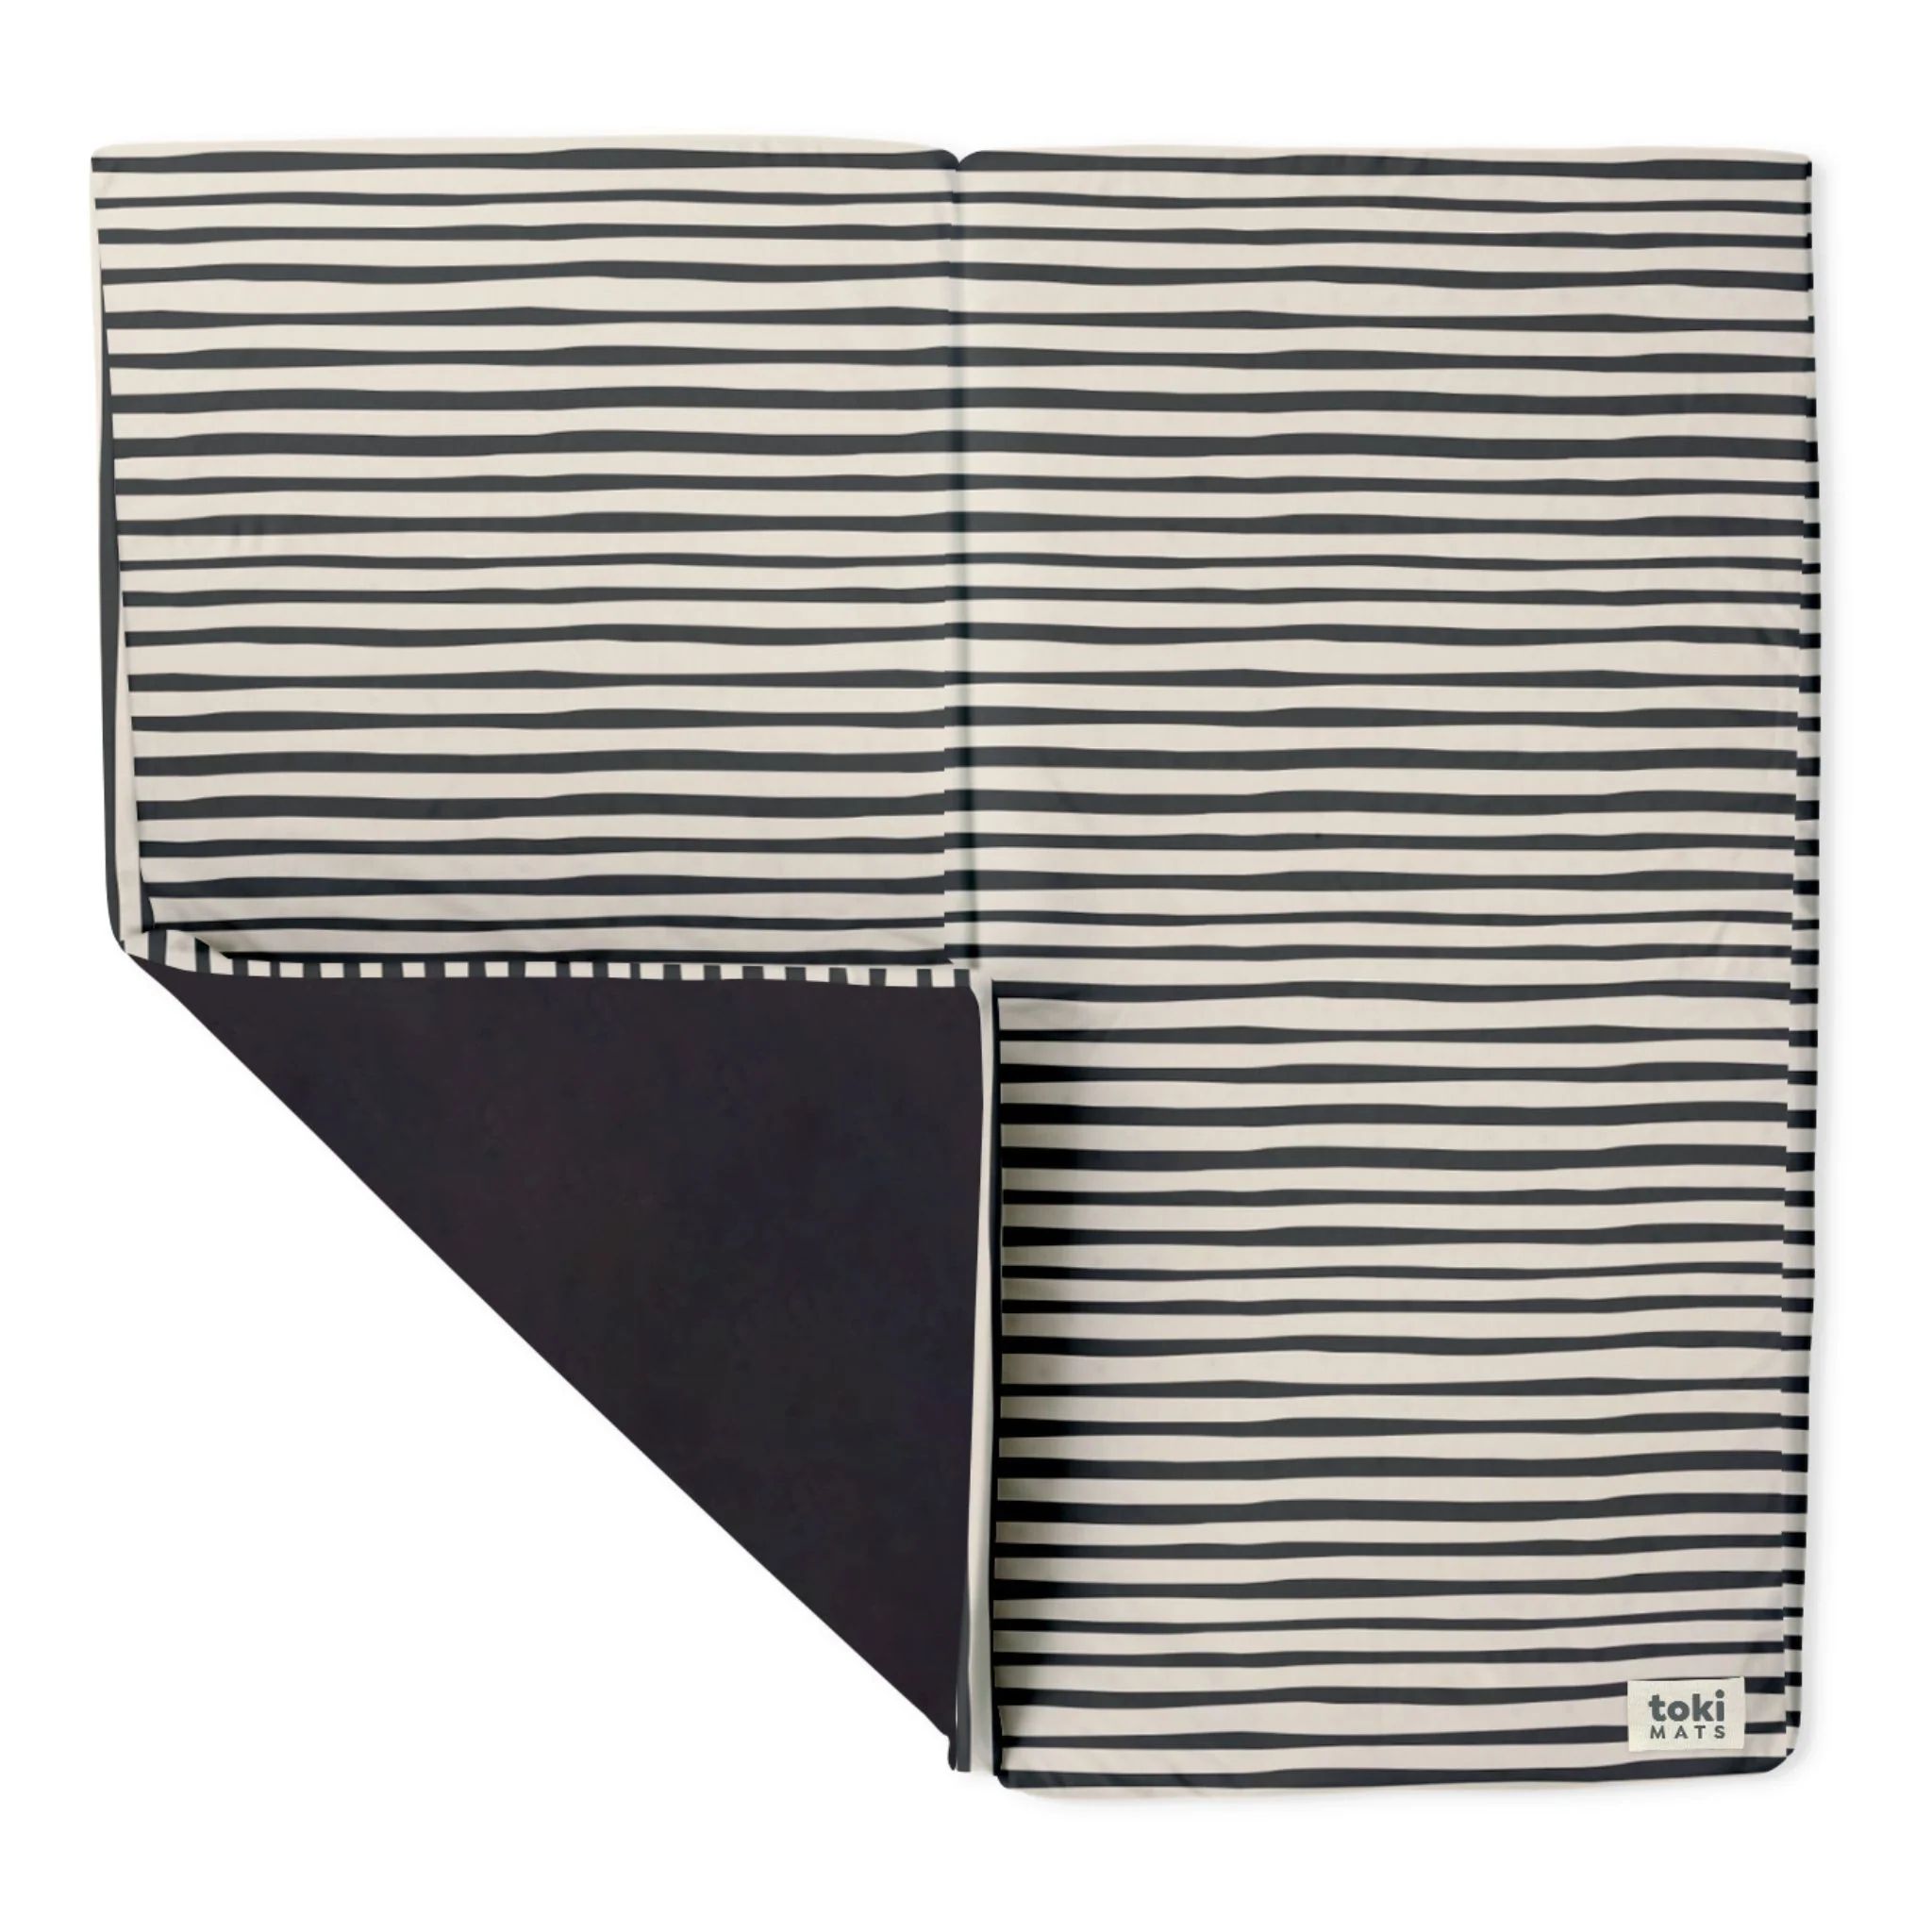 Bold Stripe Mat | Toki Mats